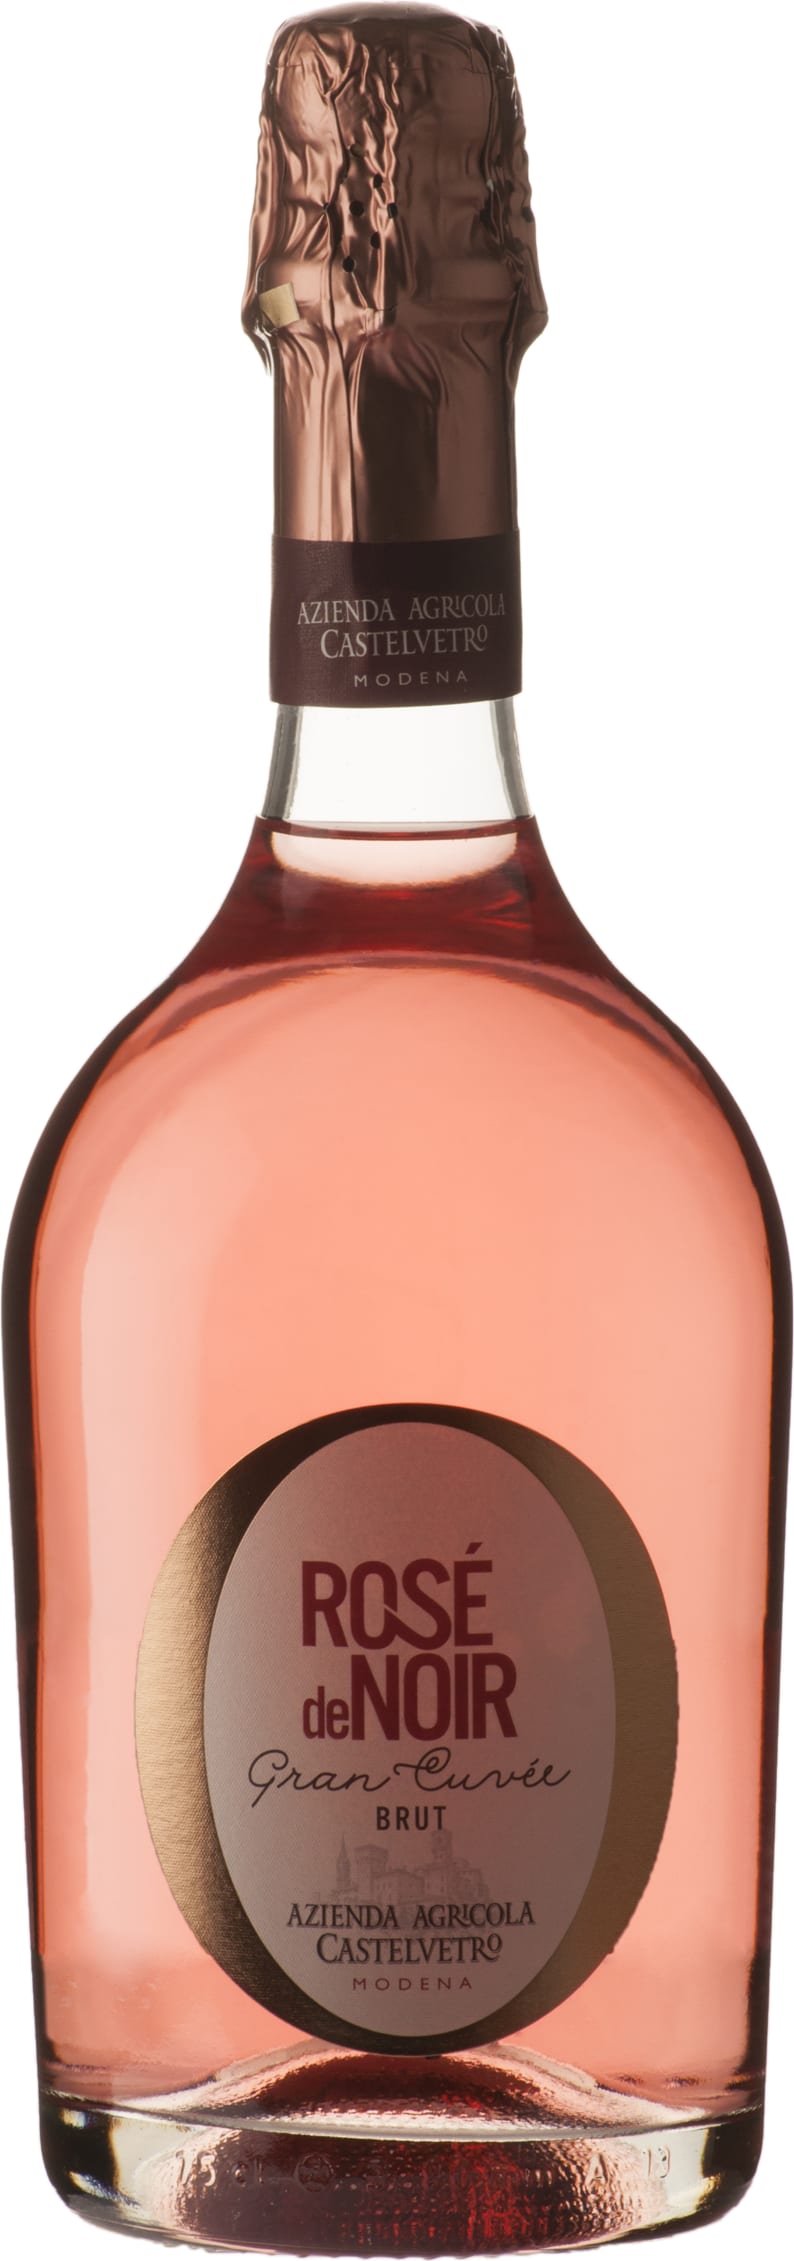 Castelvetro Rose Brut de Noir 75cl NV - Buy Castelvetro Wines from GREAT WINES DIRECT wine shop